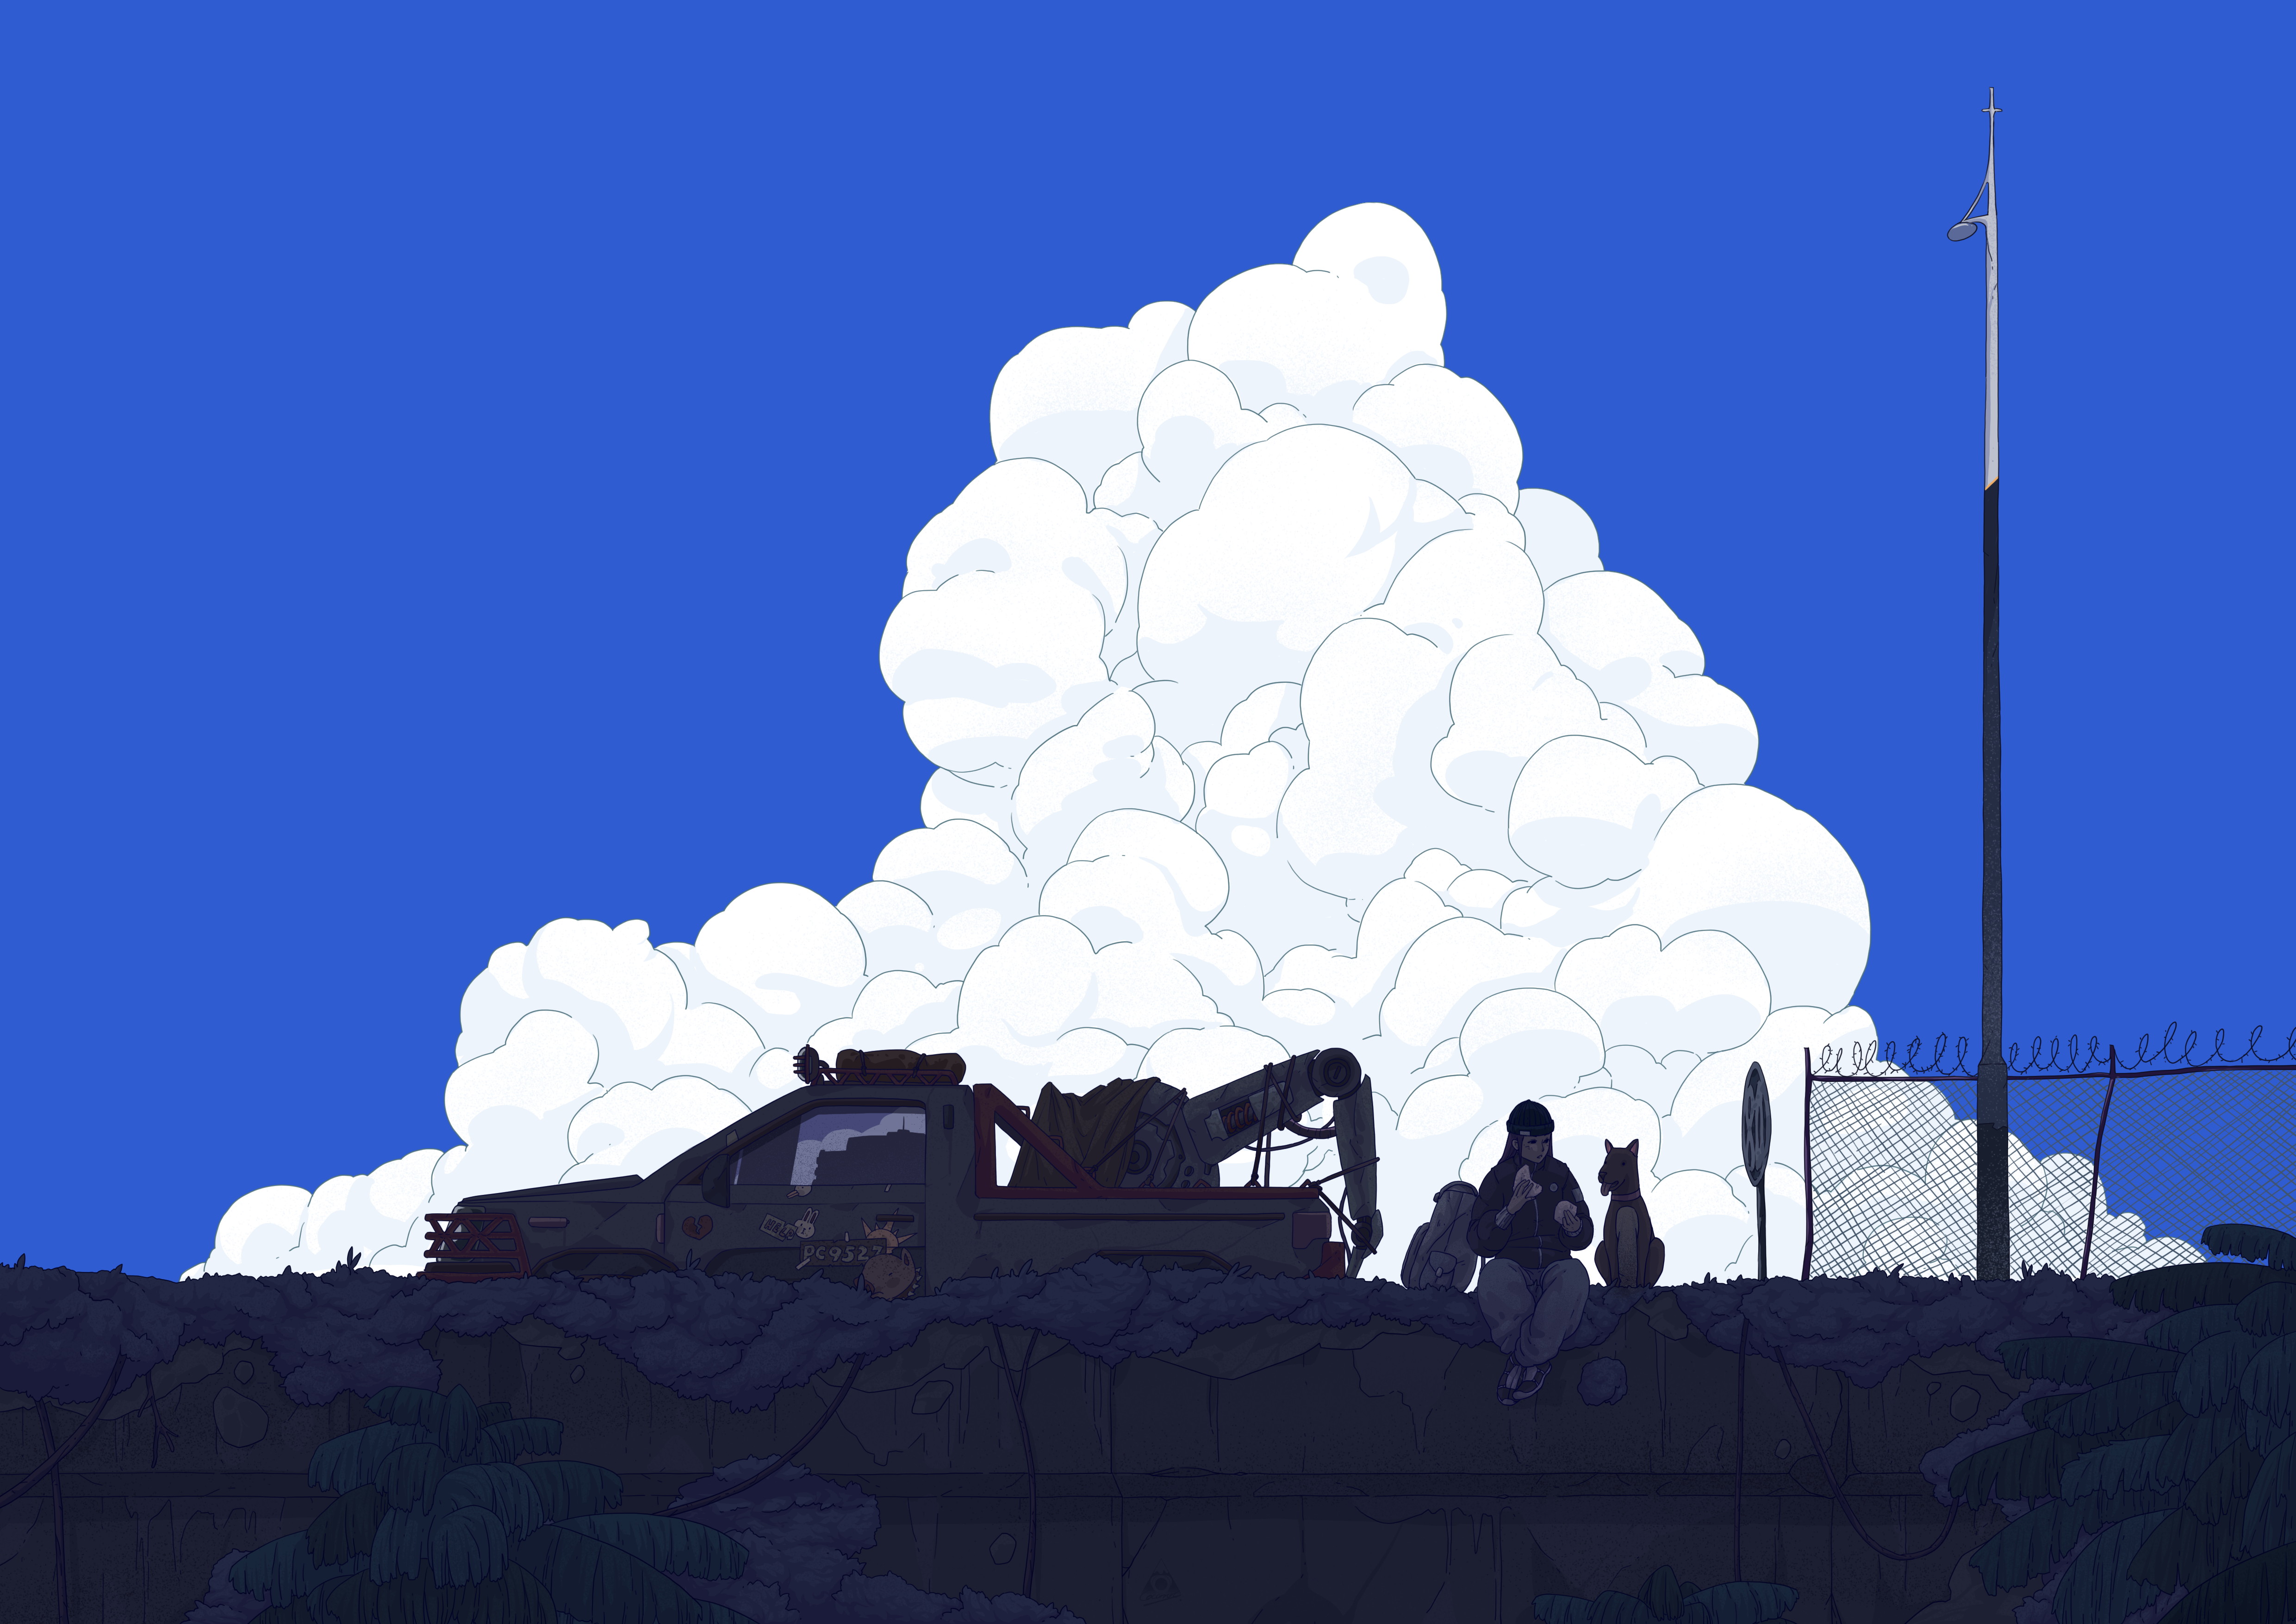 Digital Art Artwork Illustration Clouds Sky Blue Artery Gear Sitting Women Dog Animals Vehicle Crane 4961x3508